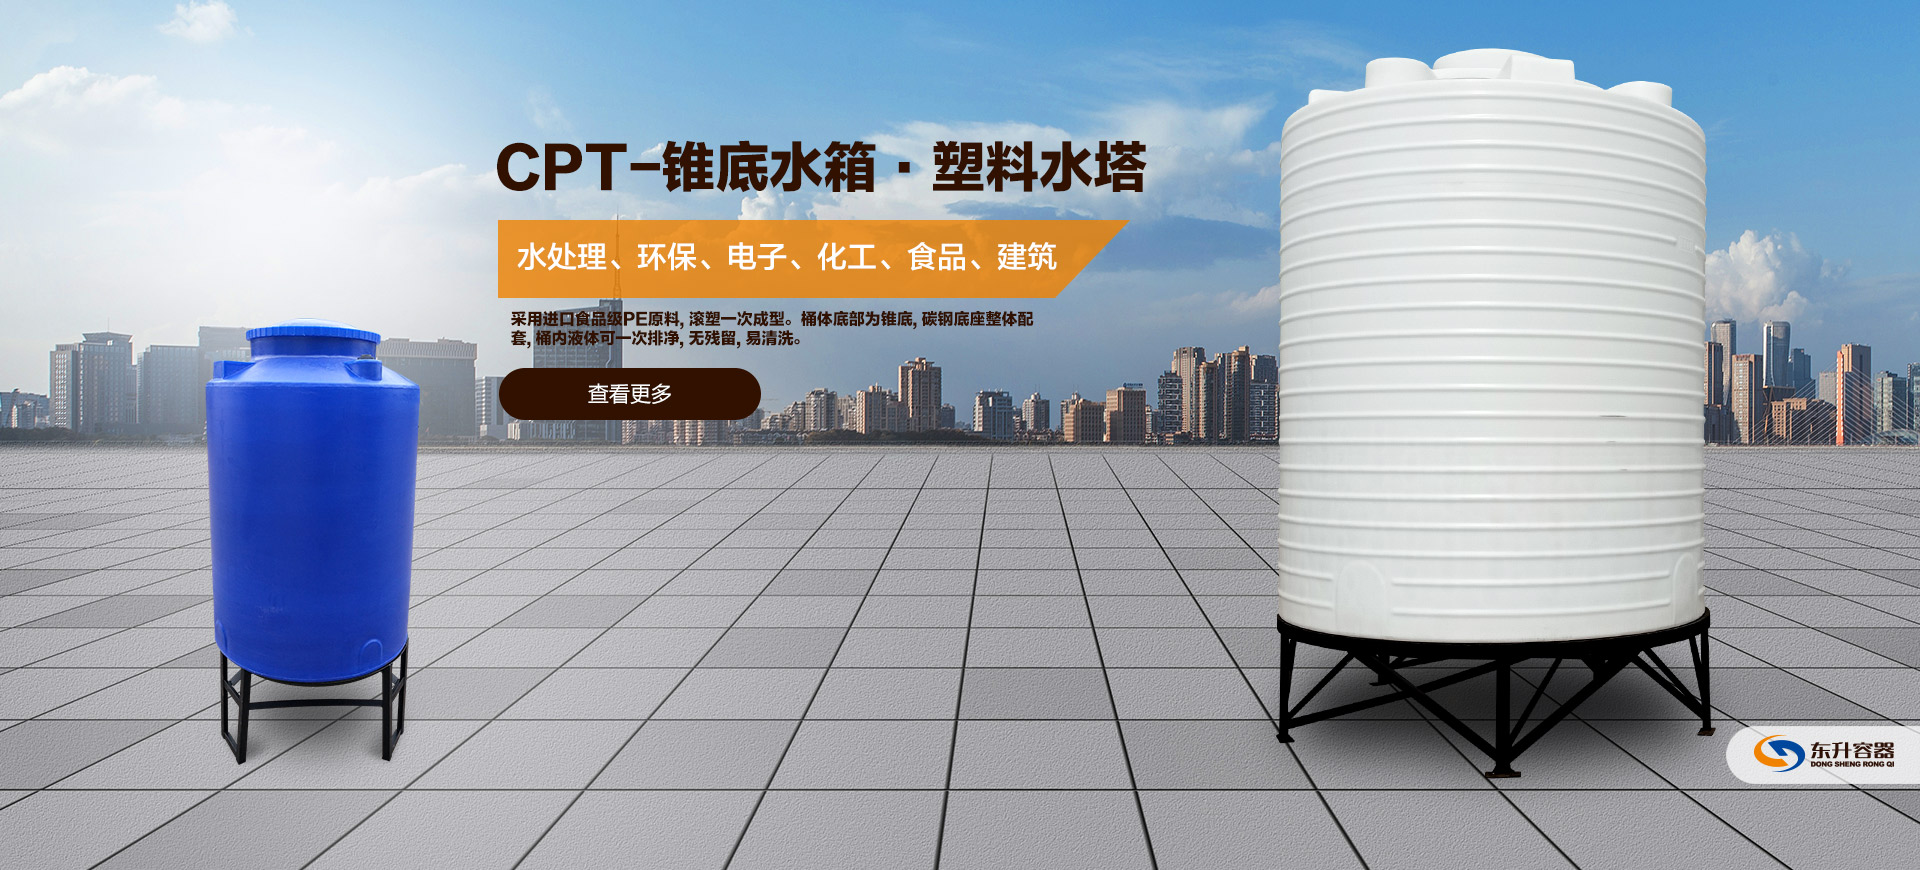 CPT-錐底水箱·塑料水塔